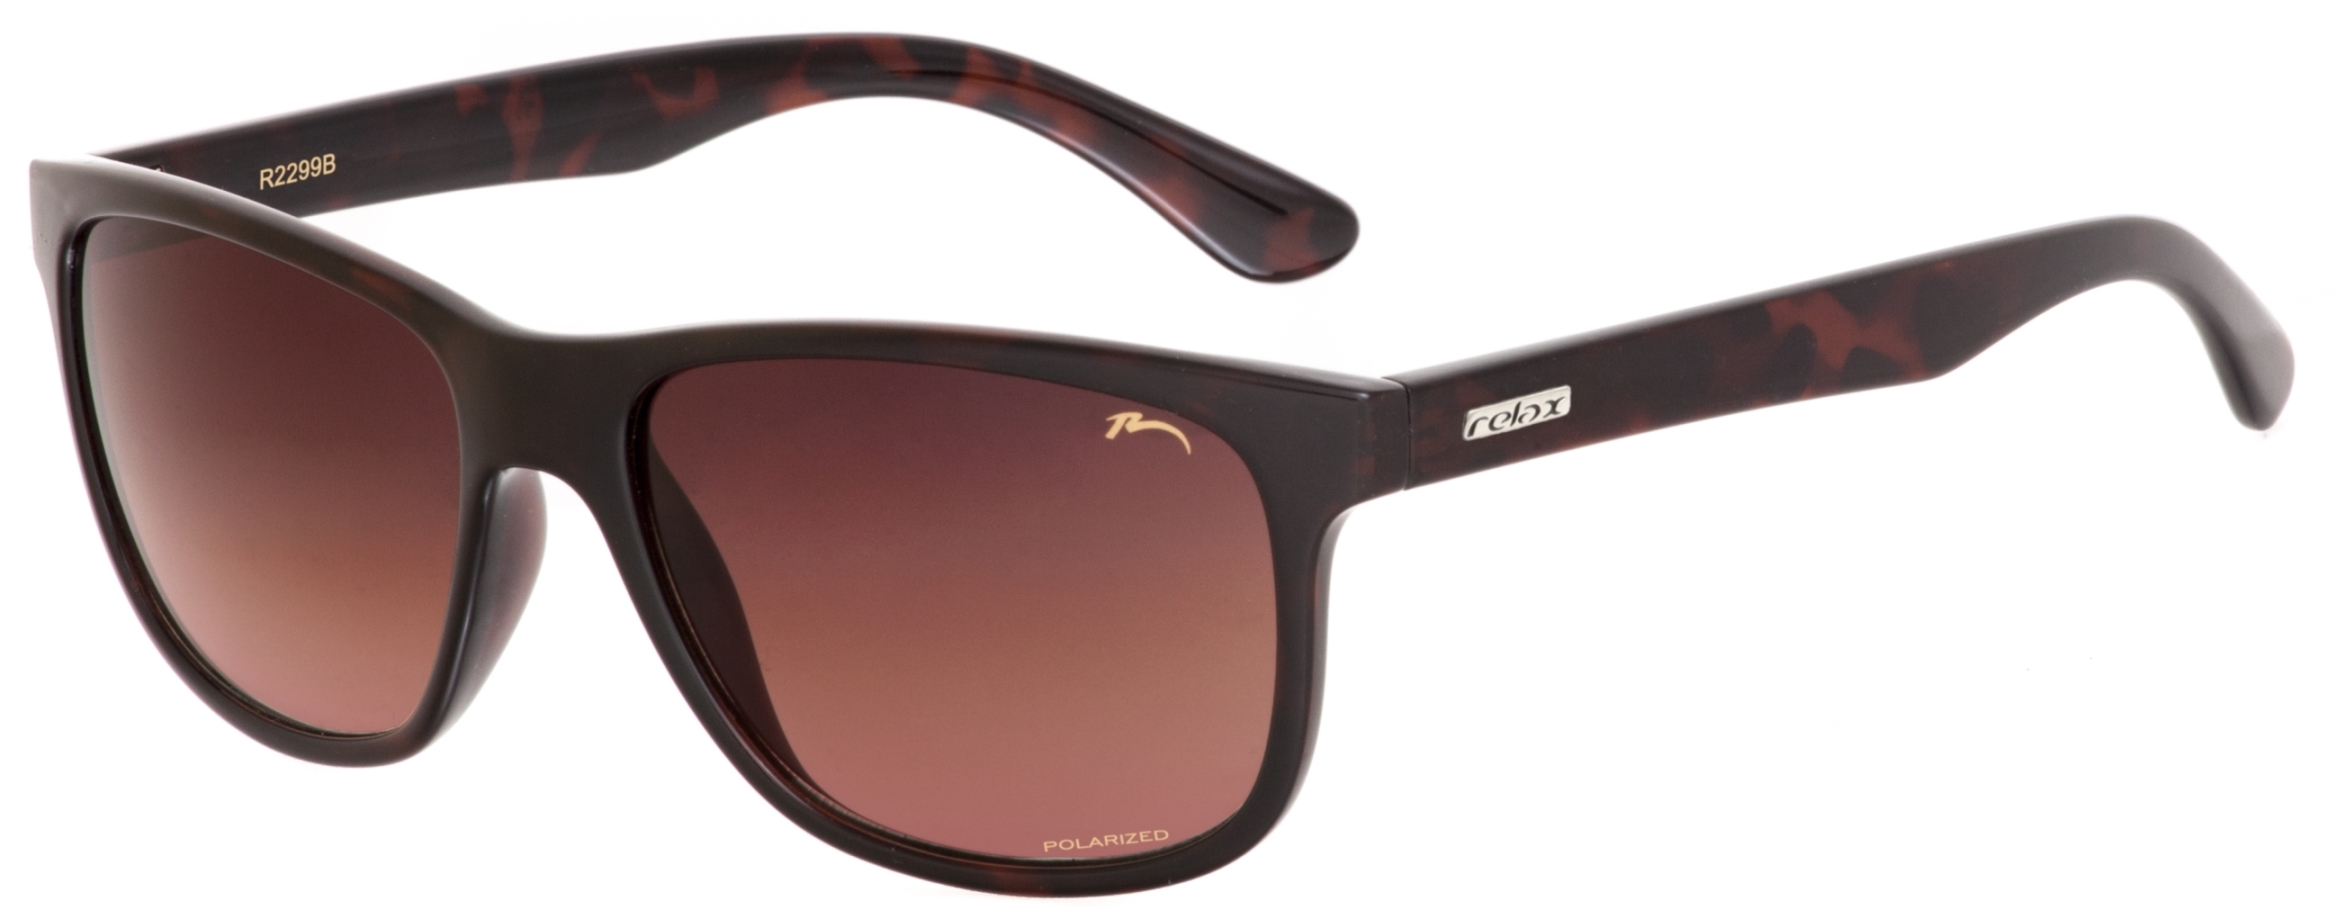 Polarized sunglasses  Relax Herds R2299B